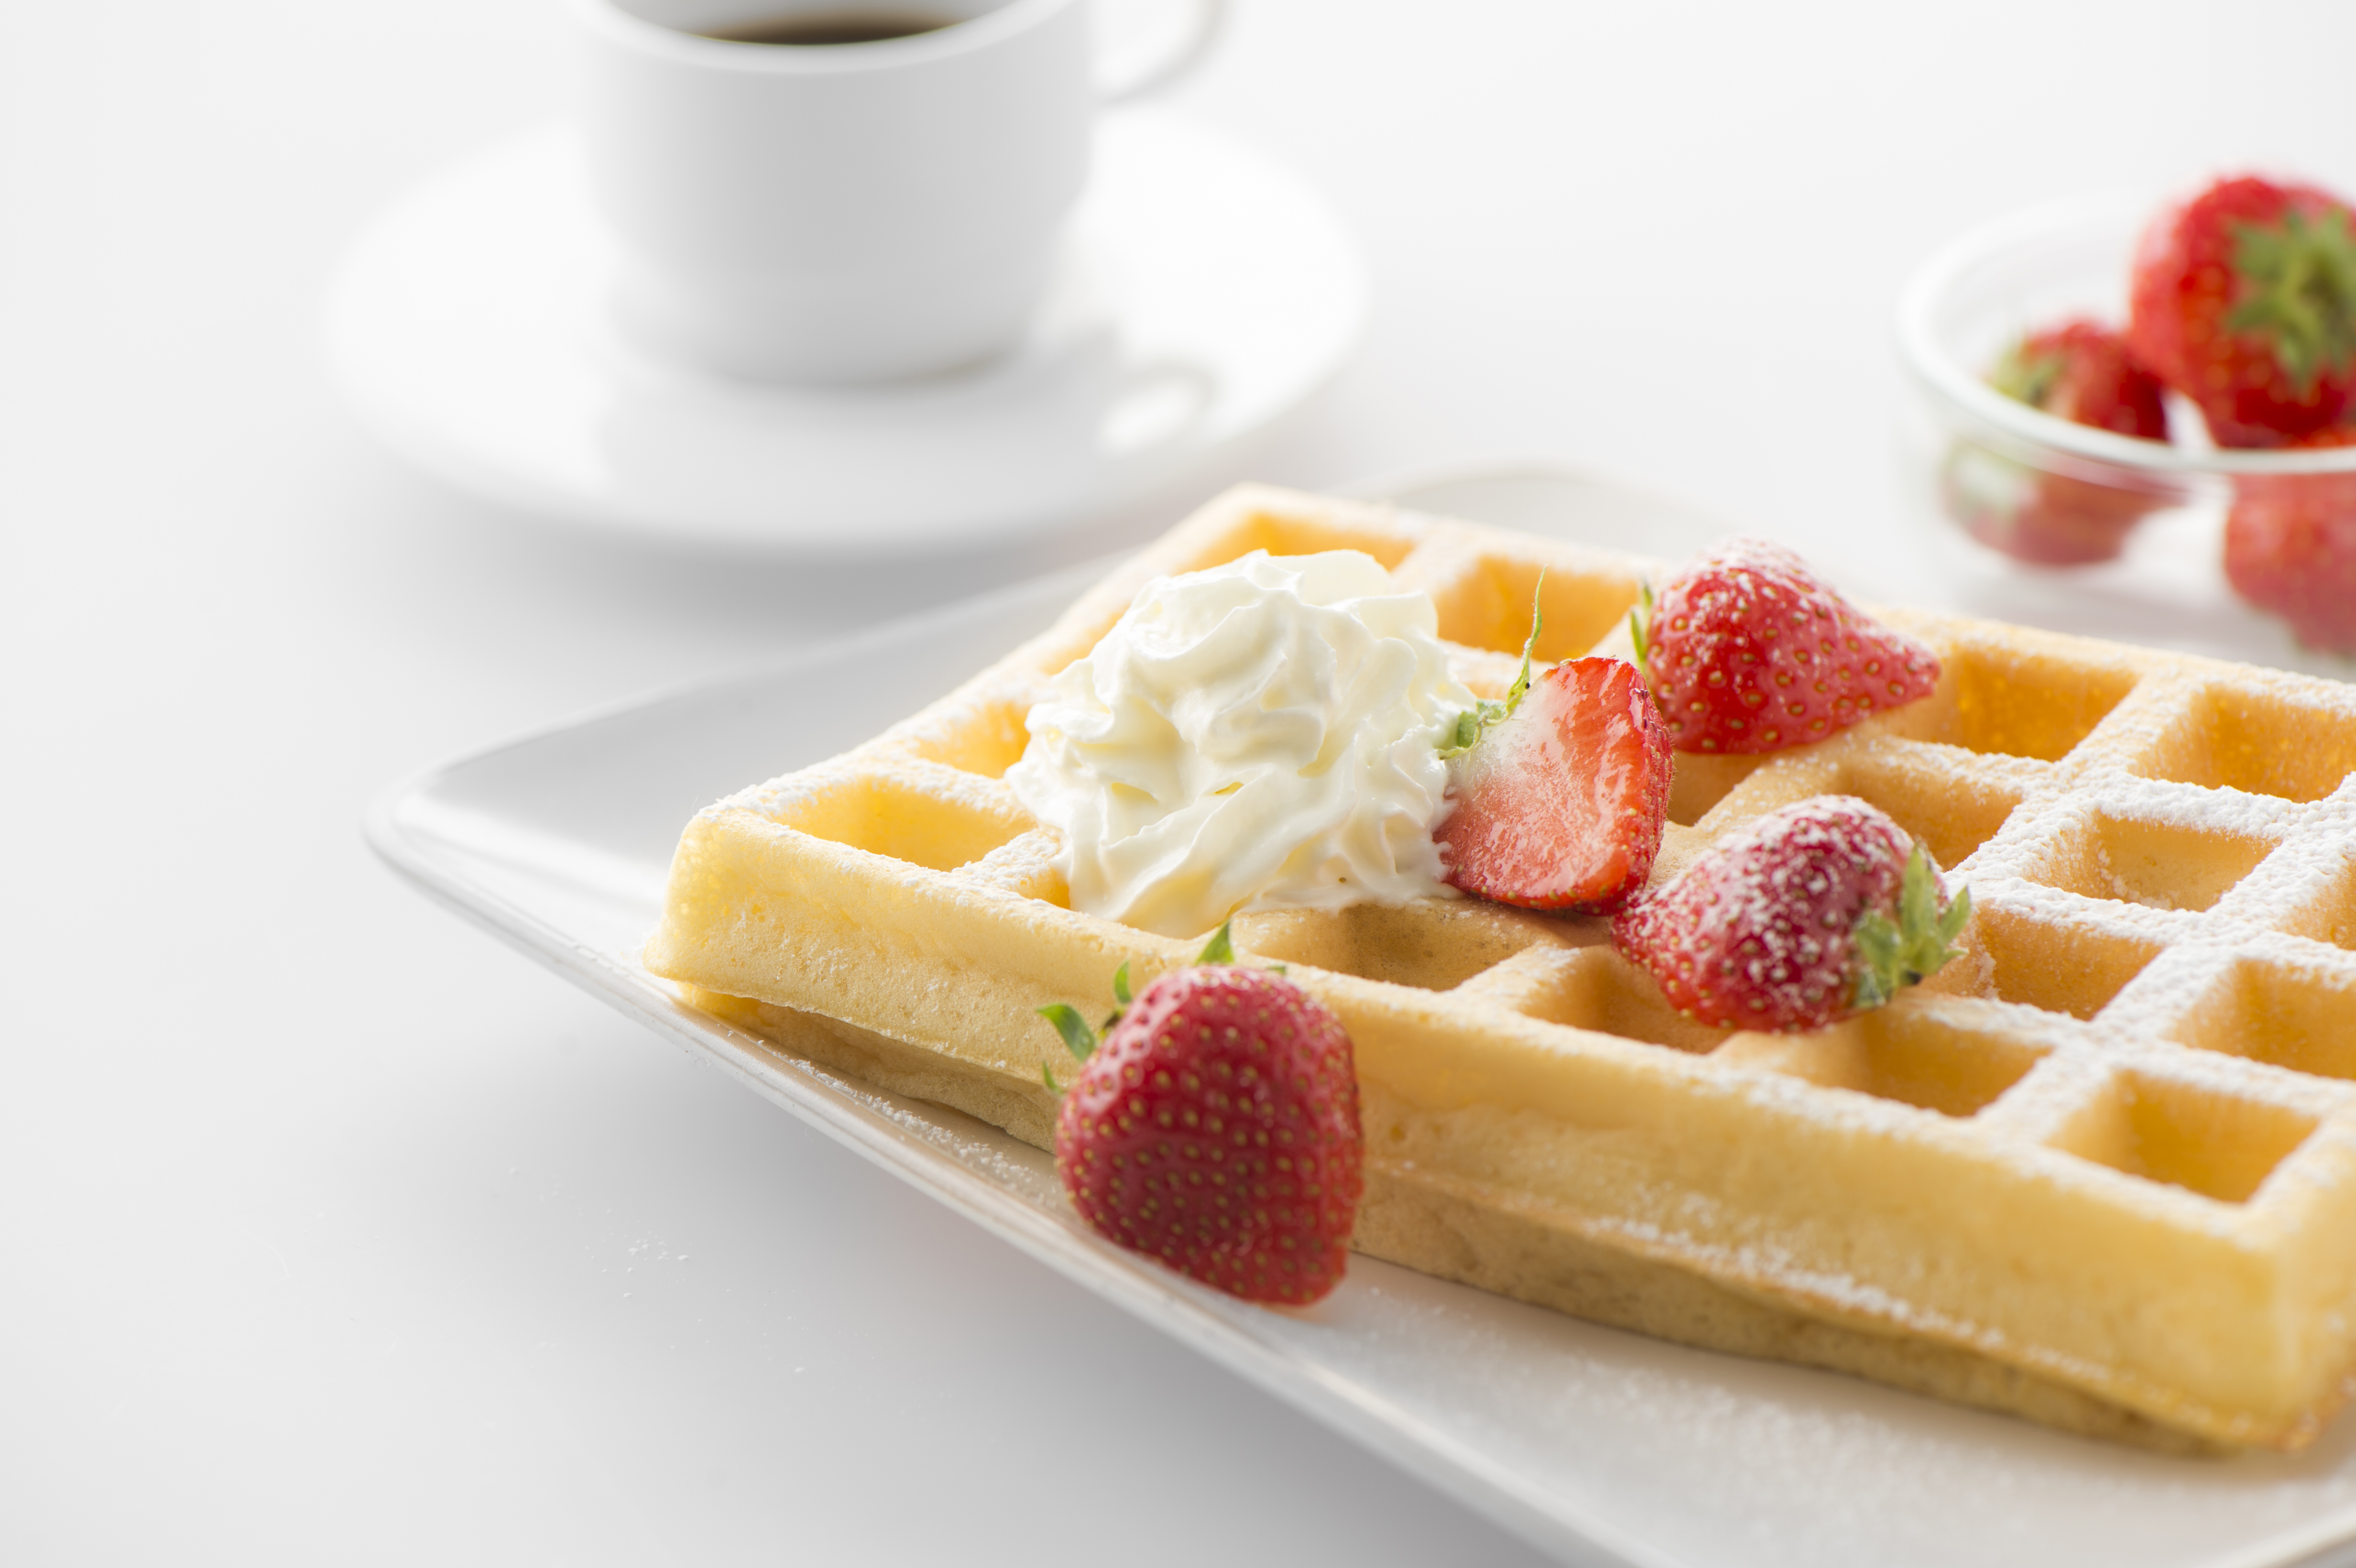 The sustainable secret of the FRITEL waffle maker